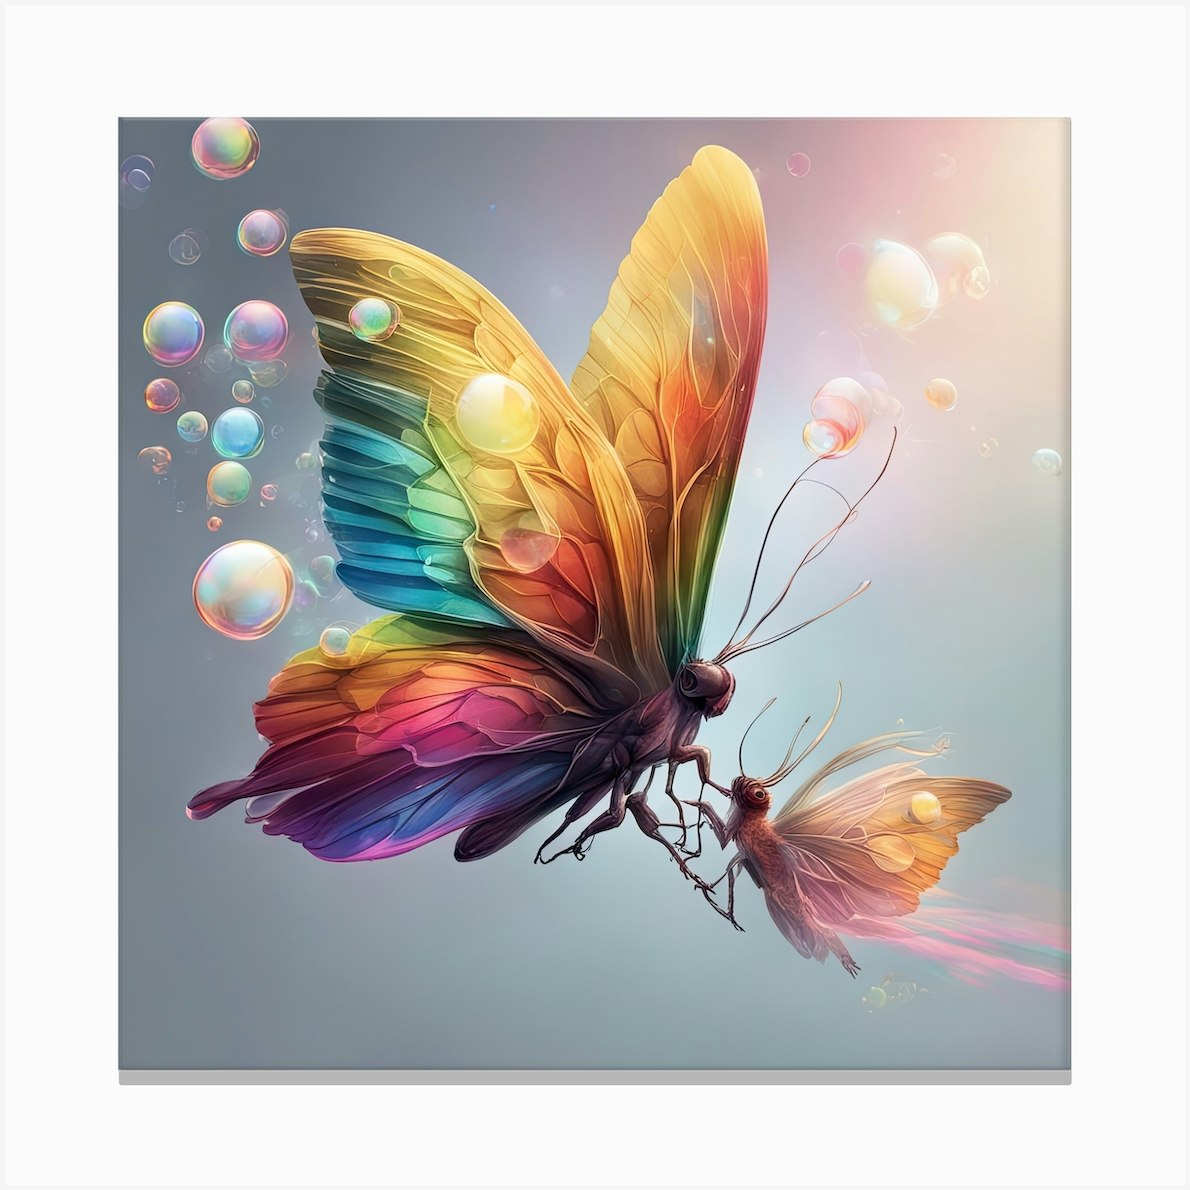 Fantasy Butterfly print by rclassen